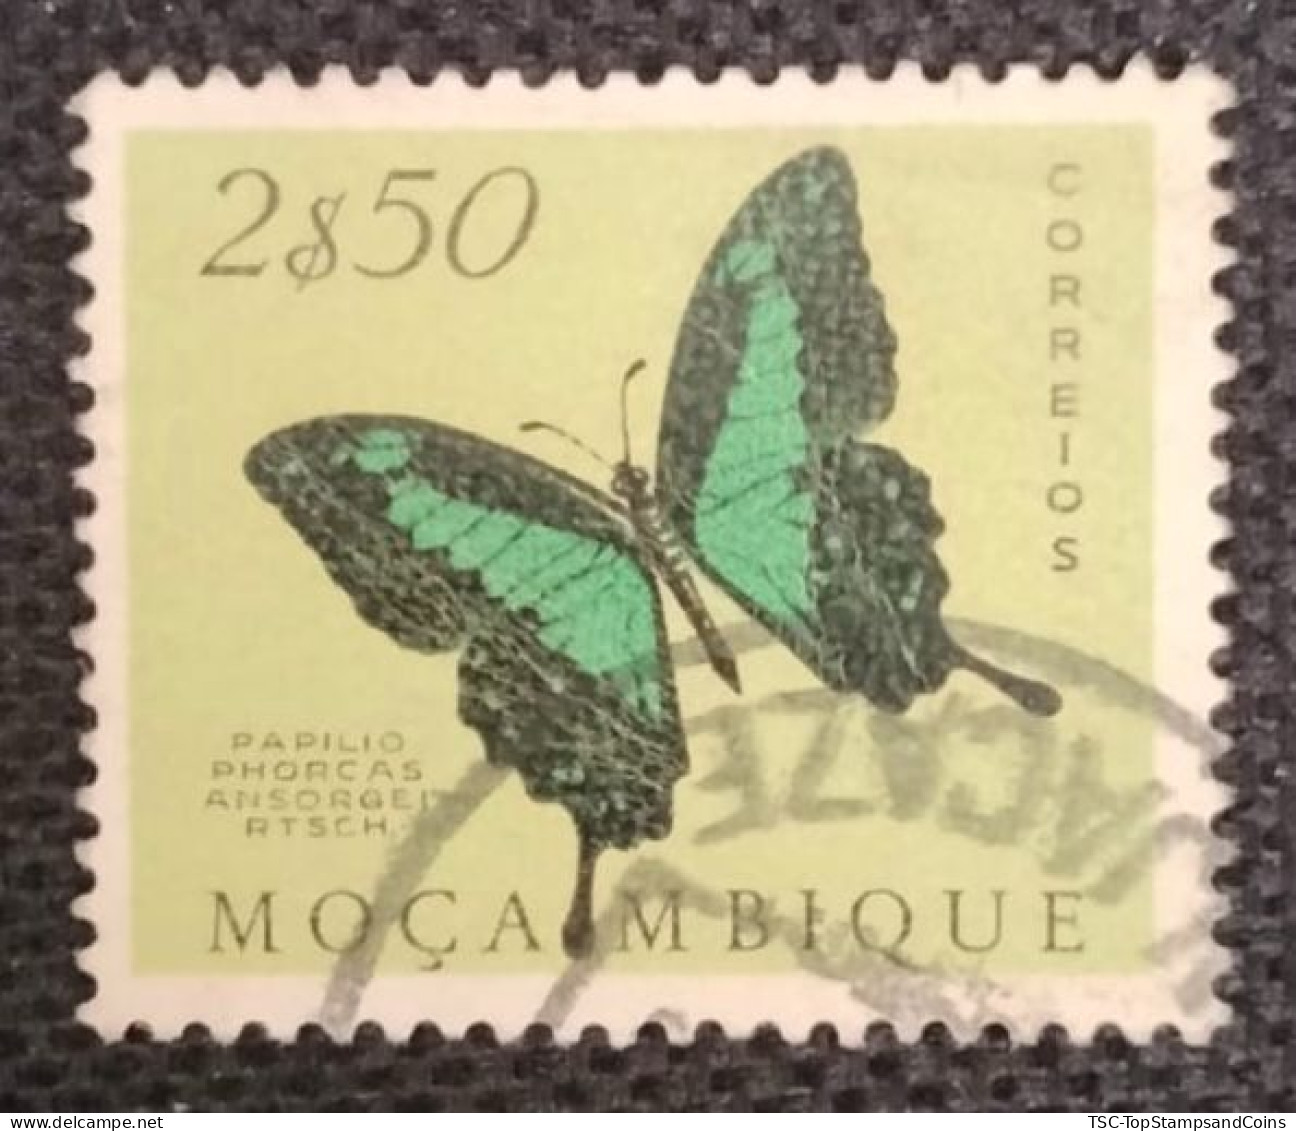 MOZPO0399UA - Mozambique Butterflies  - 2$50 Used Stamp - Mozambique - 1953 - Mozambique